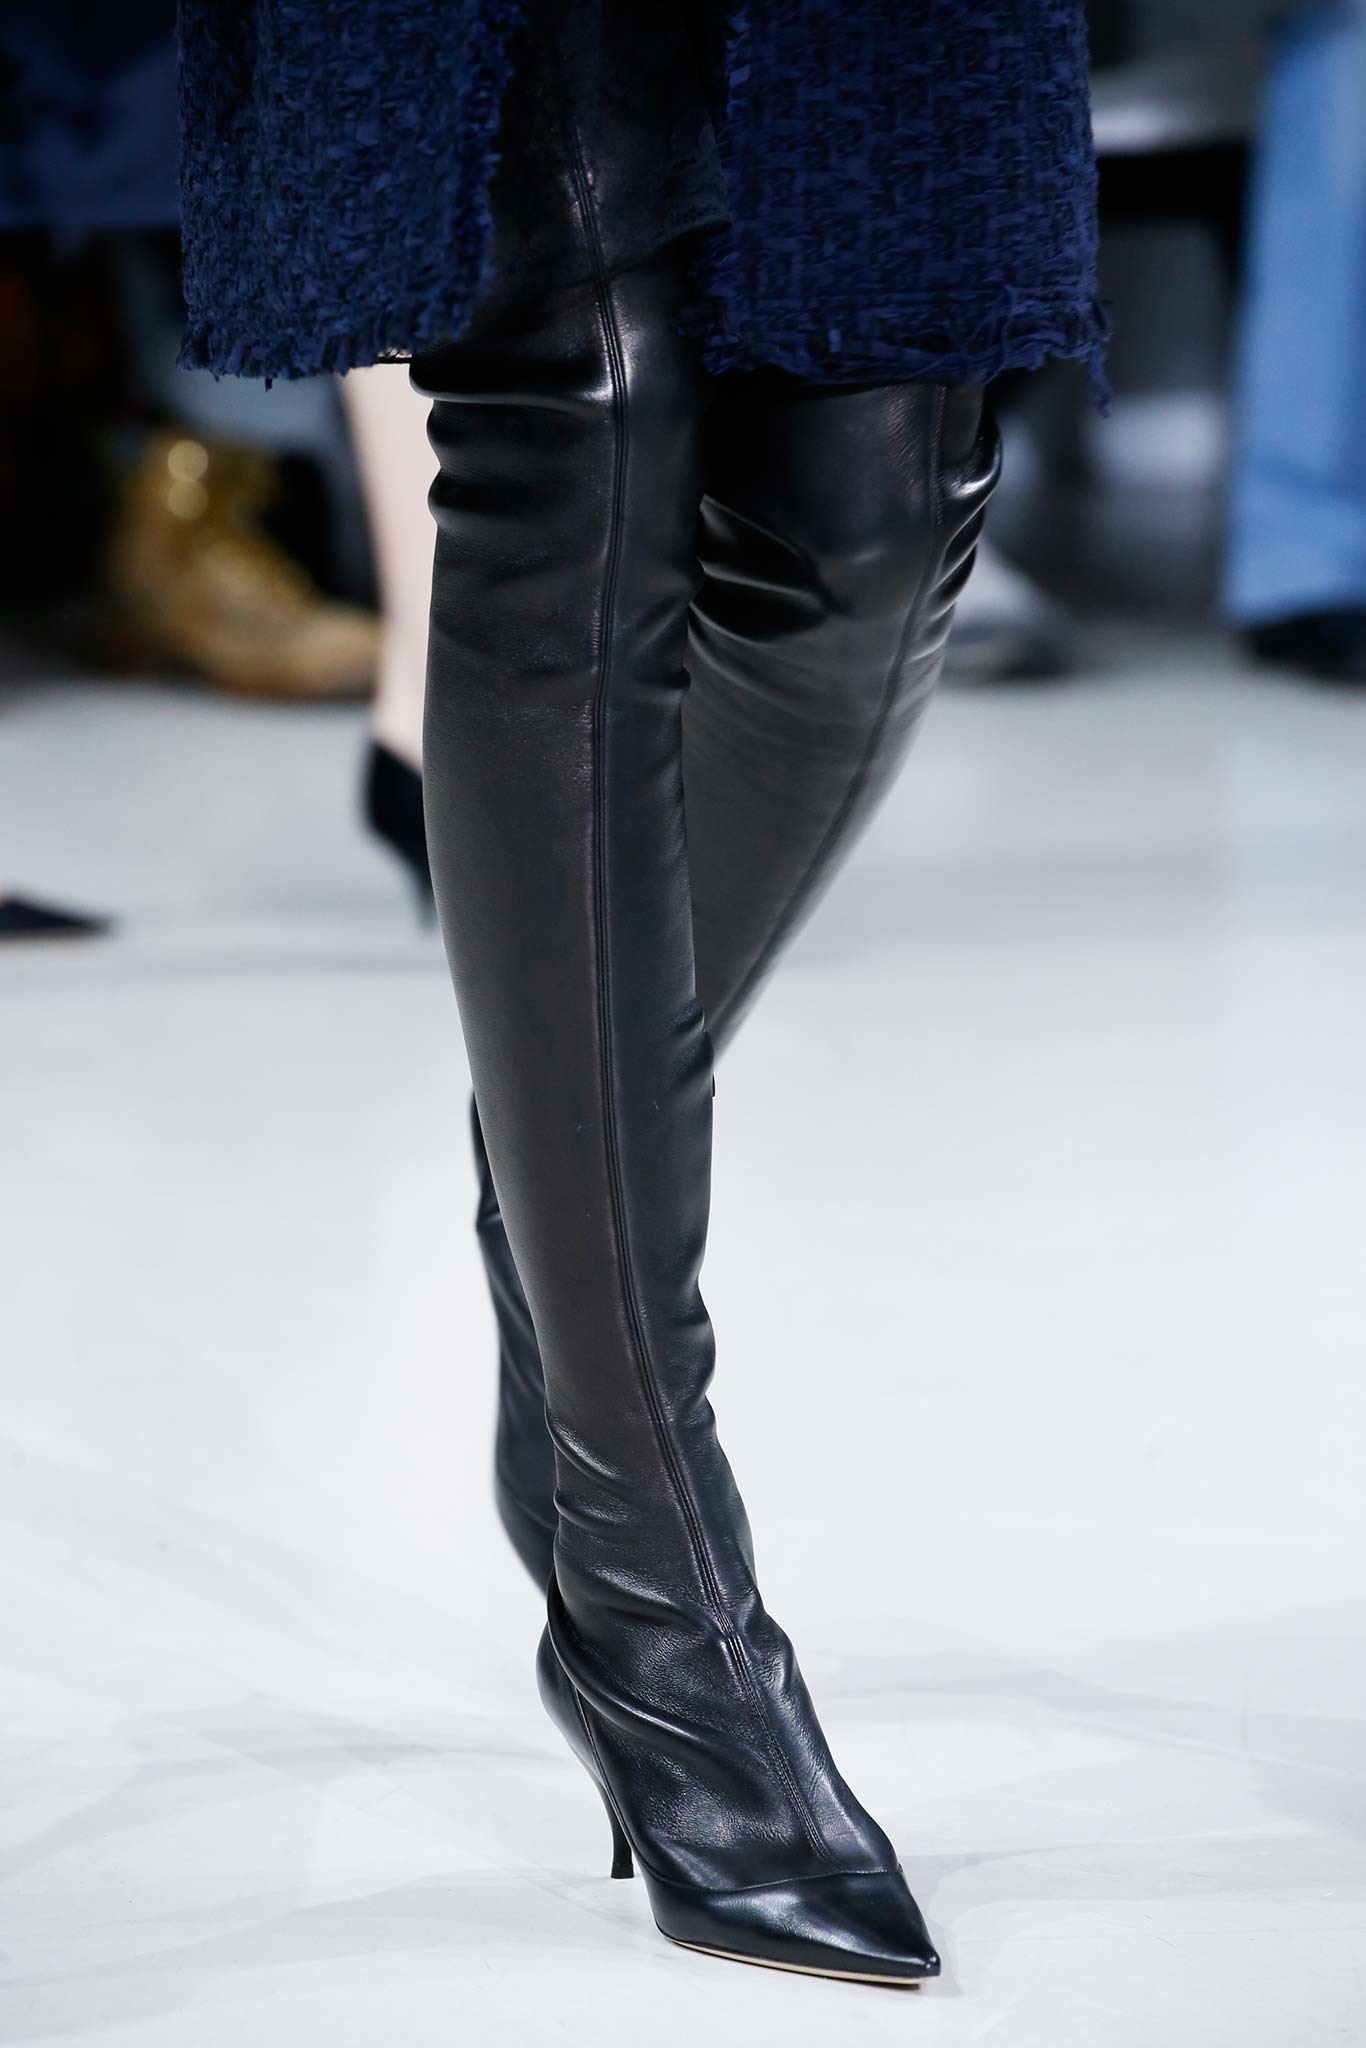 06-05-accessories-trends-fall-2015-thigh-high-boots.jpg